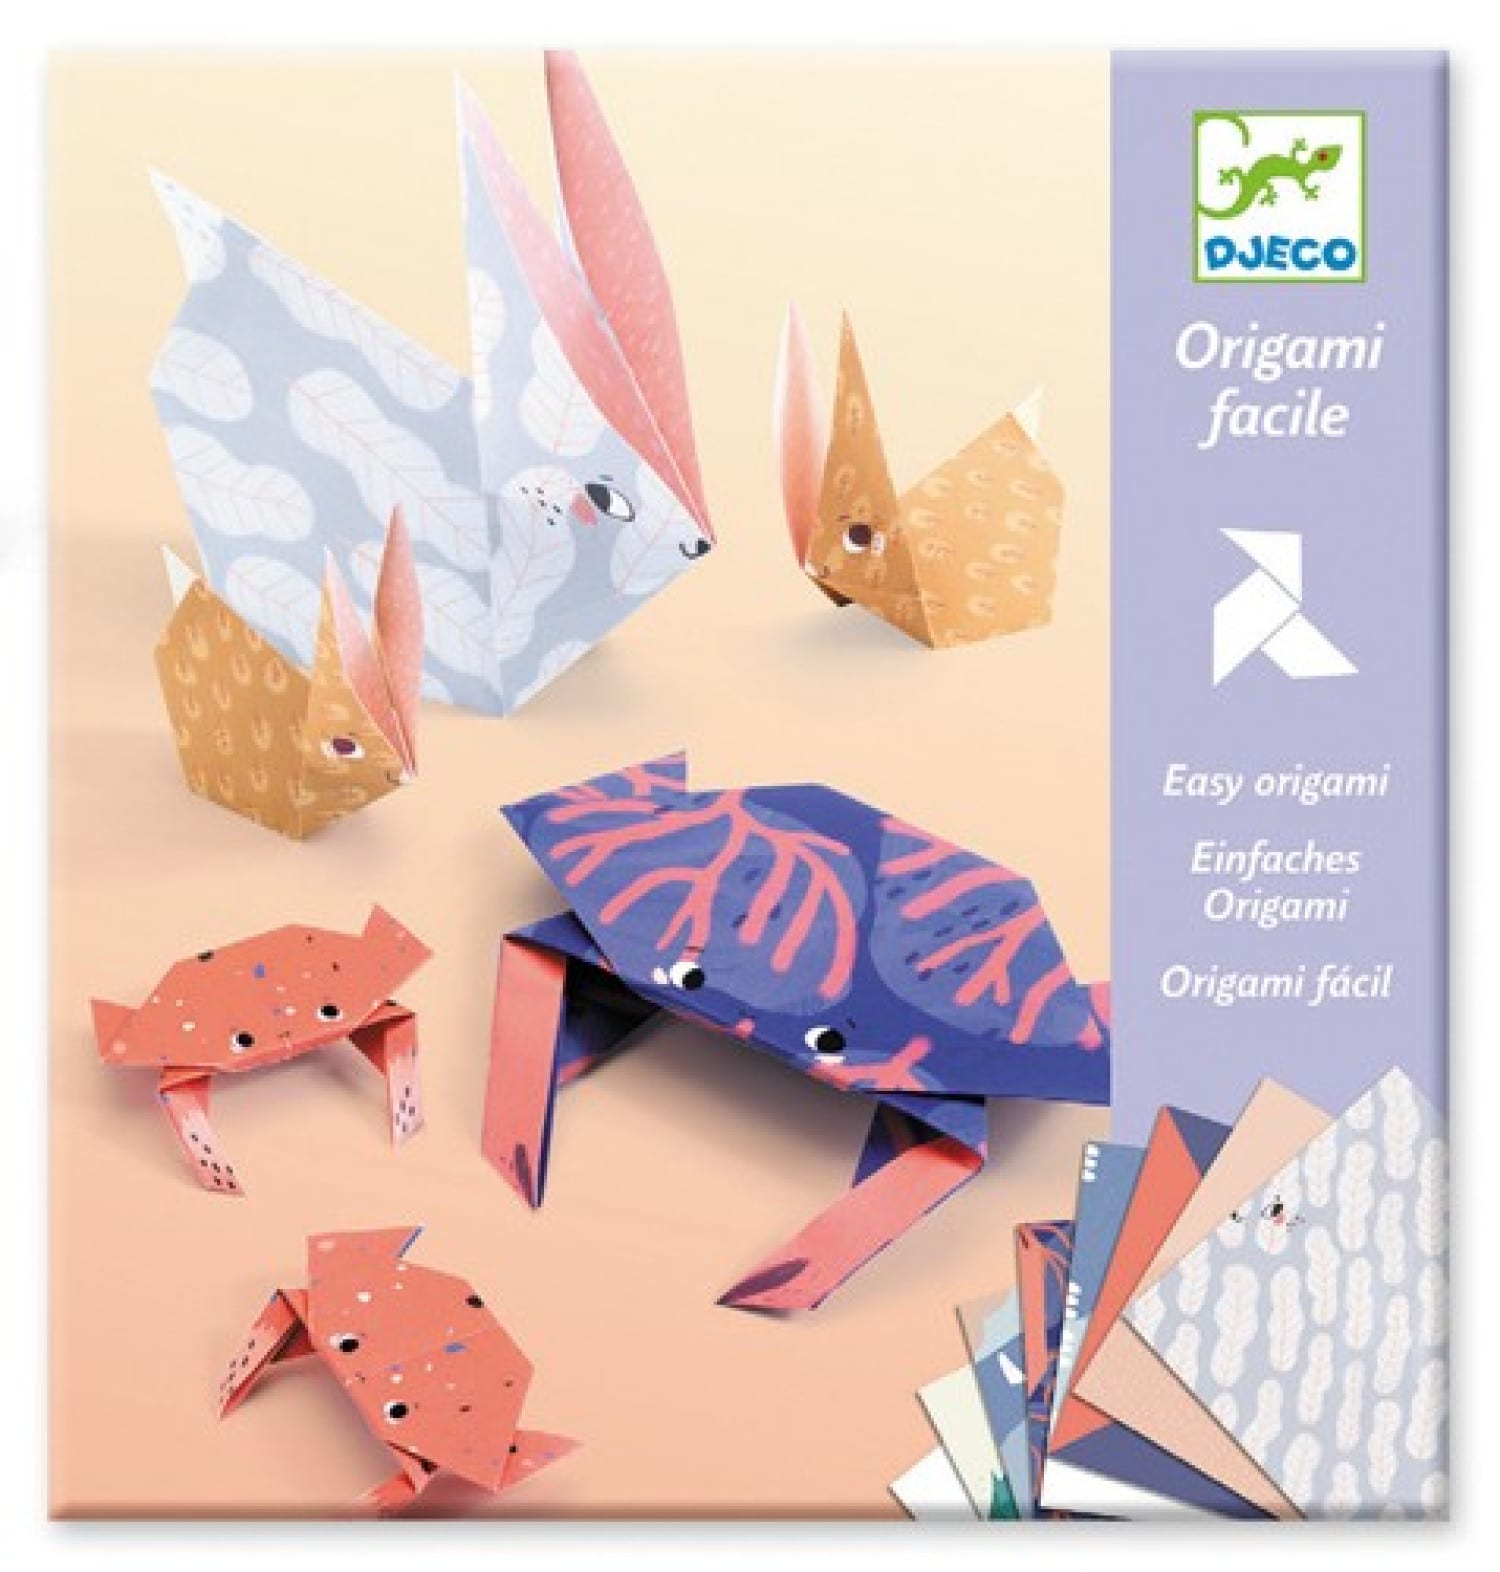 Origami – Family